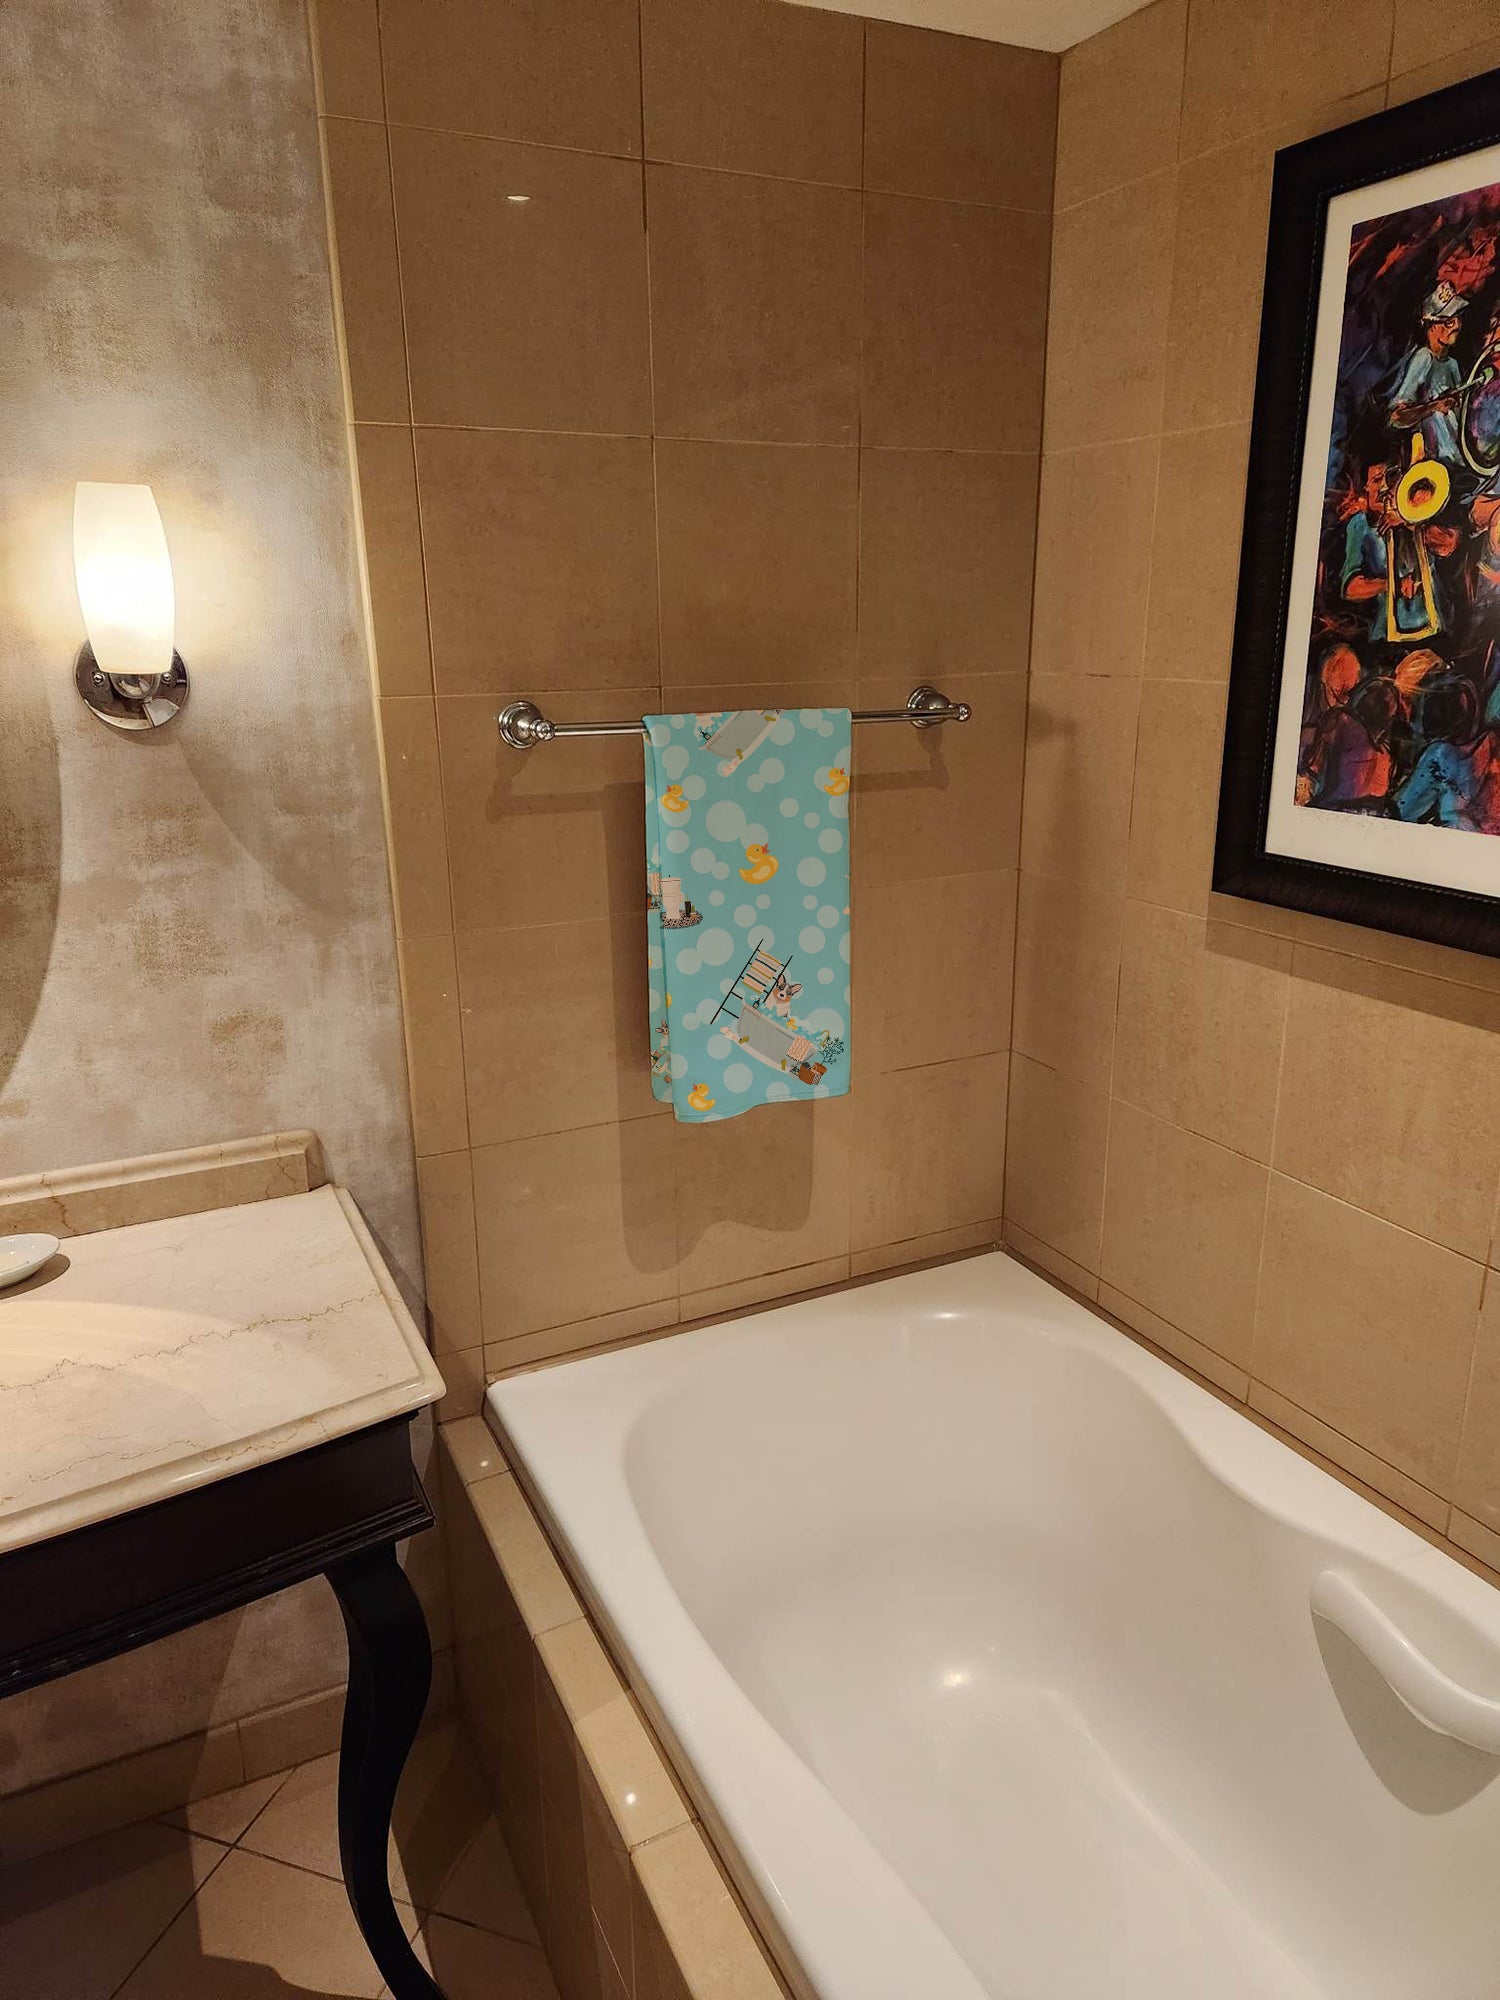 Buy this Blue Merle Cardigan Corgi Bath Towel Large